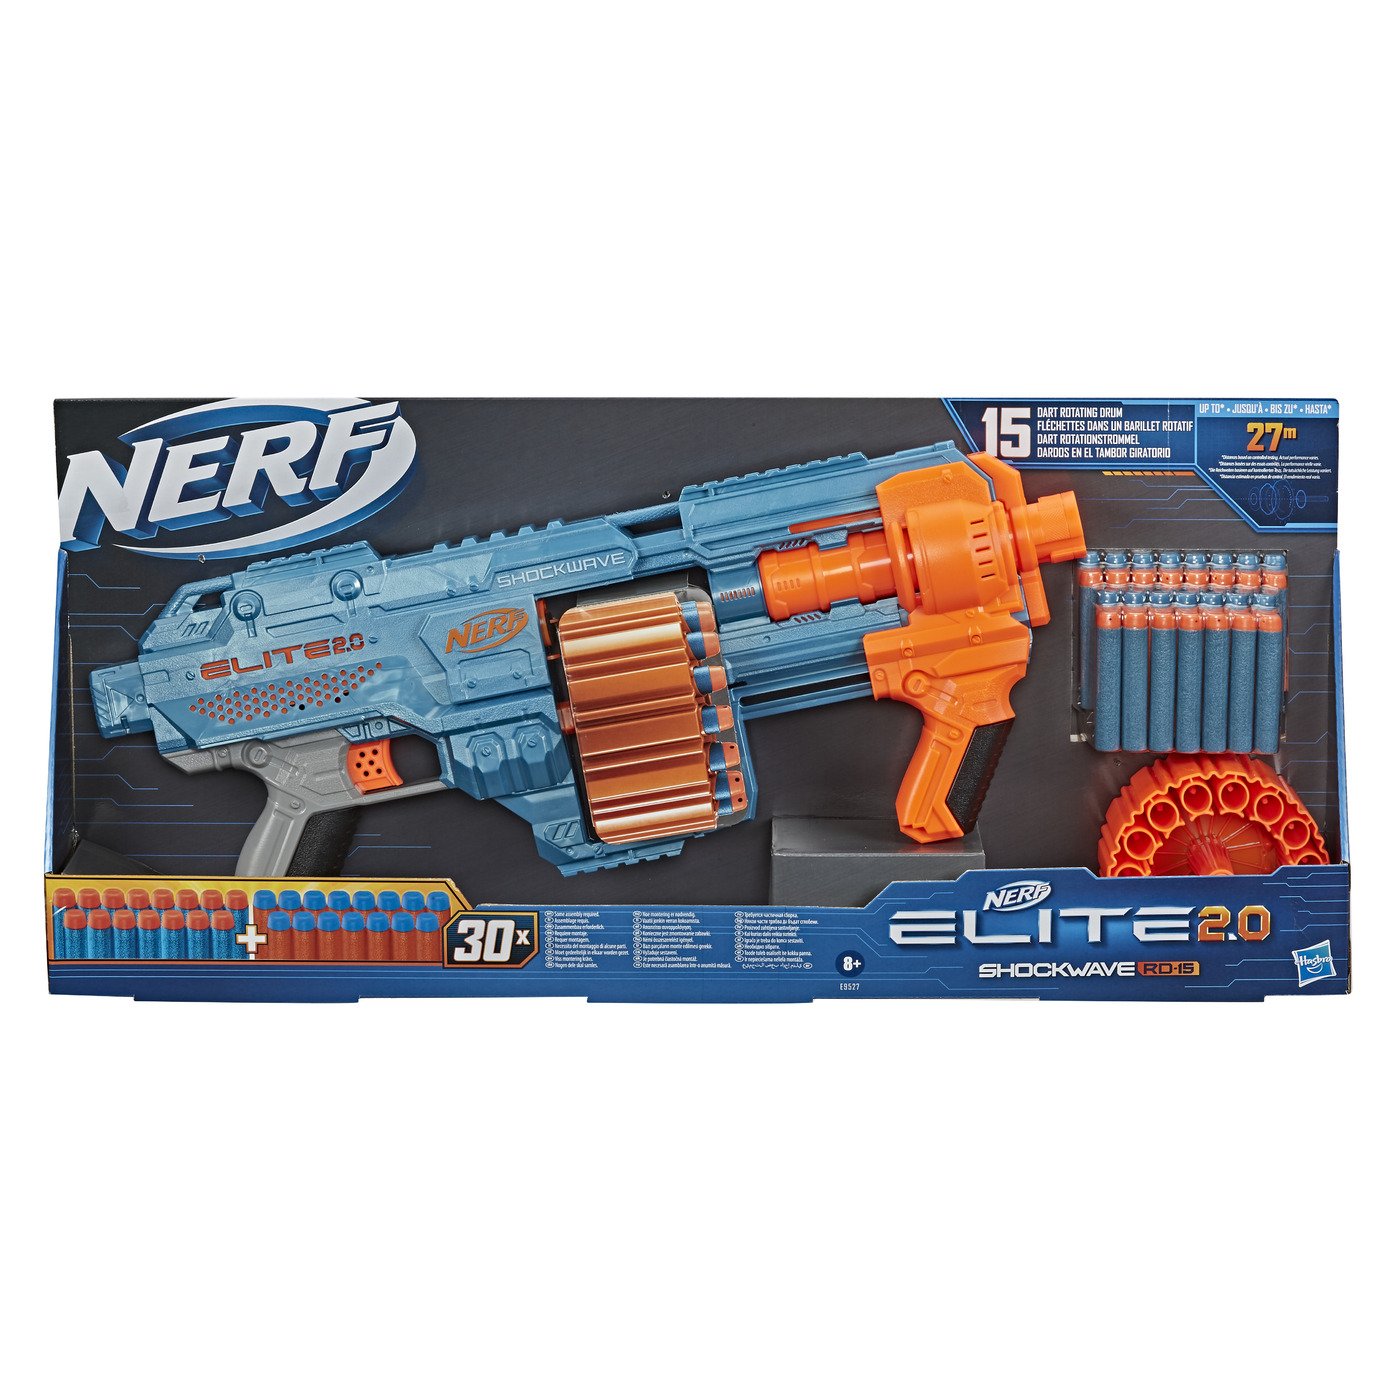 Nerf Elite 2.0 Shockwave RD-15 Blaster Review